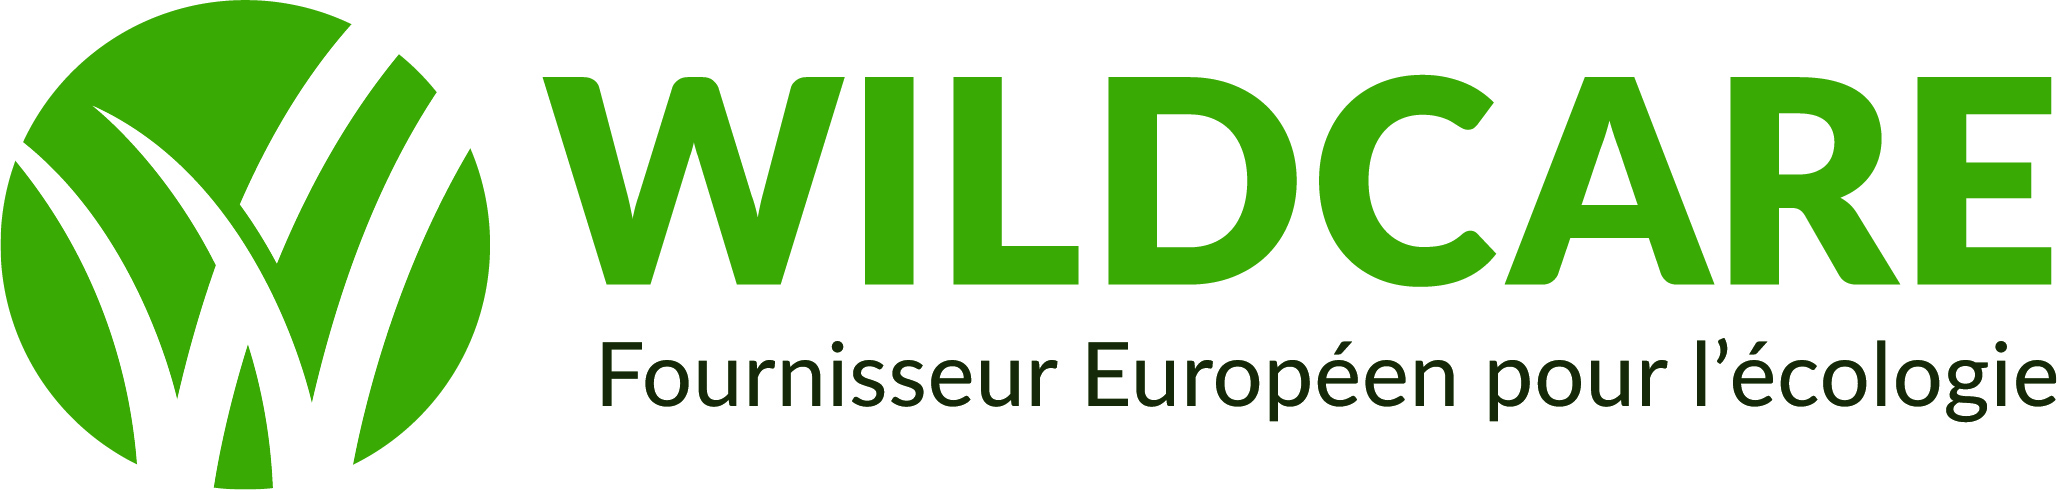 Wildcare Logo Horizontal Green EU